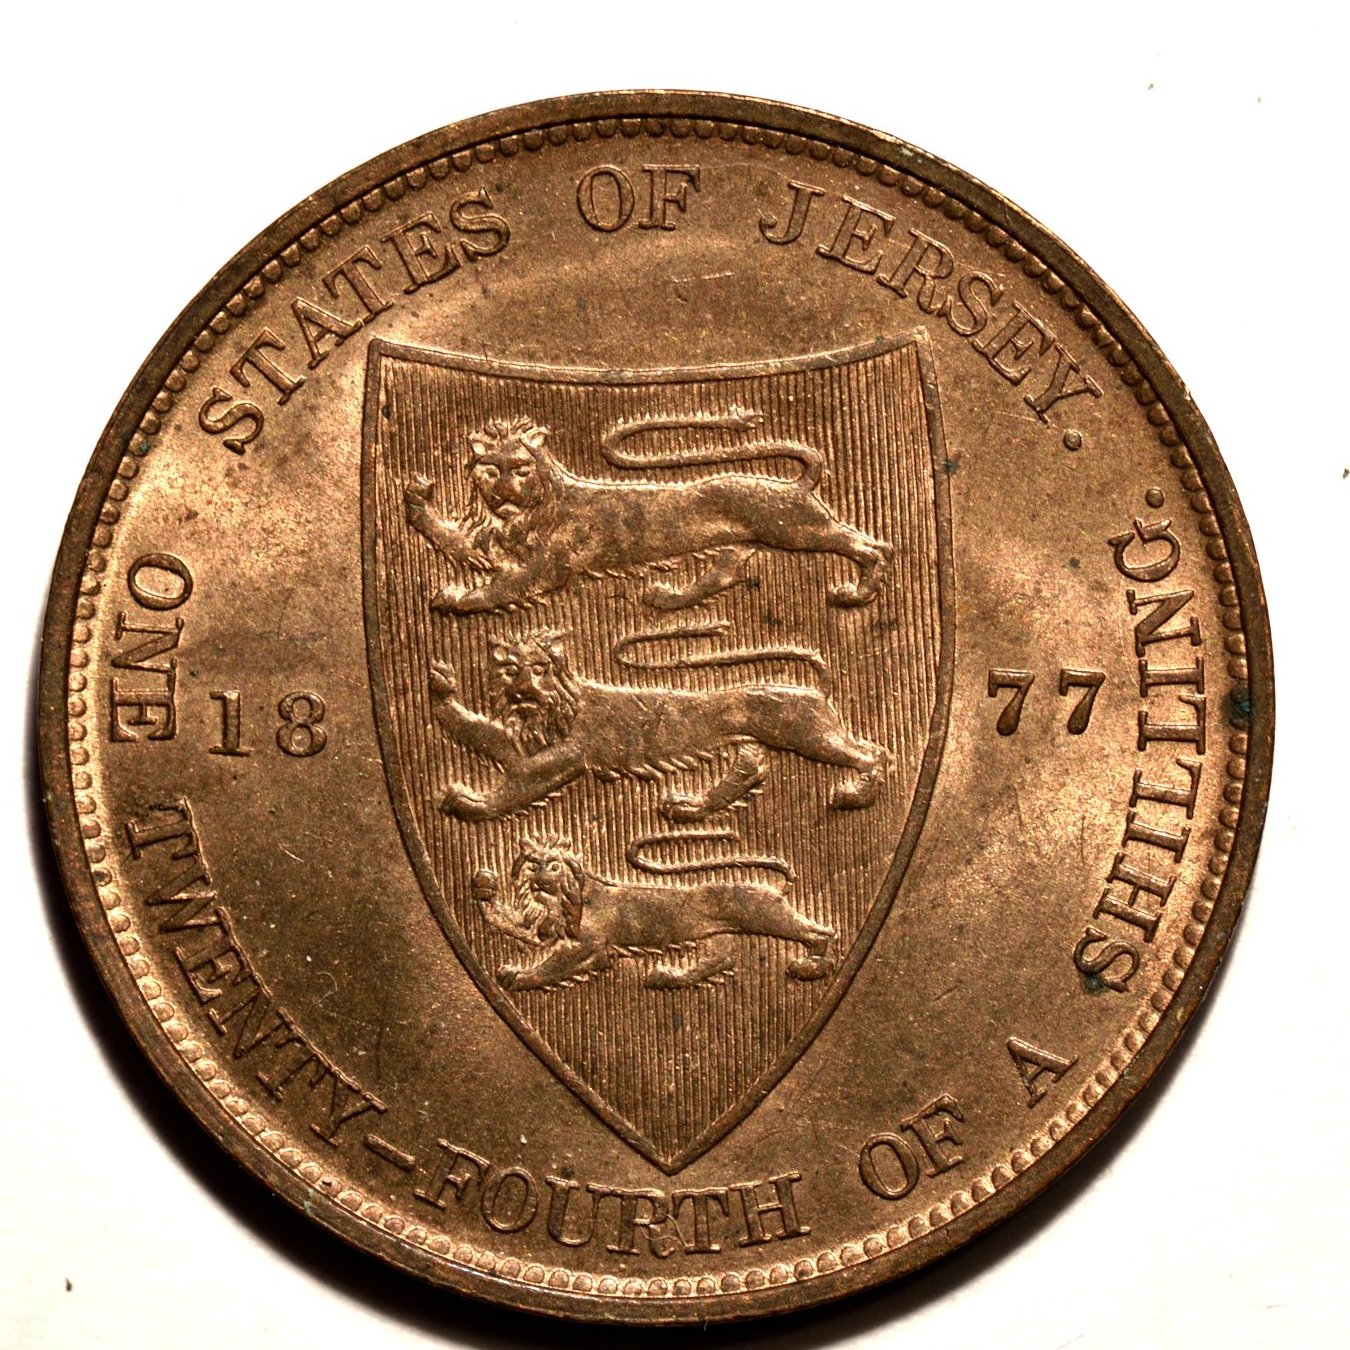 1877 half penny reverse